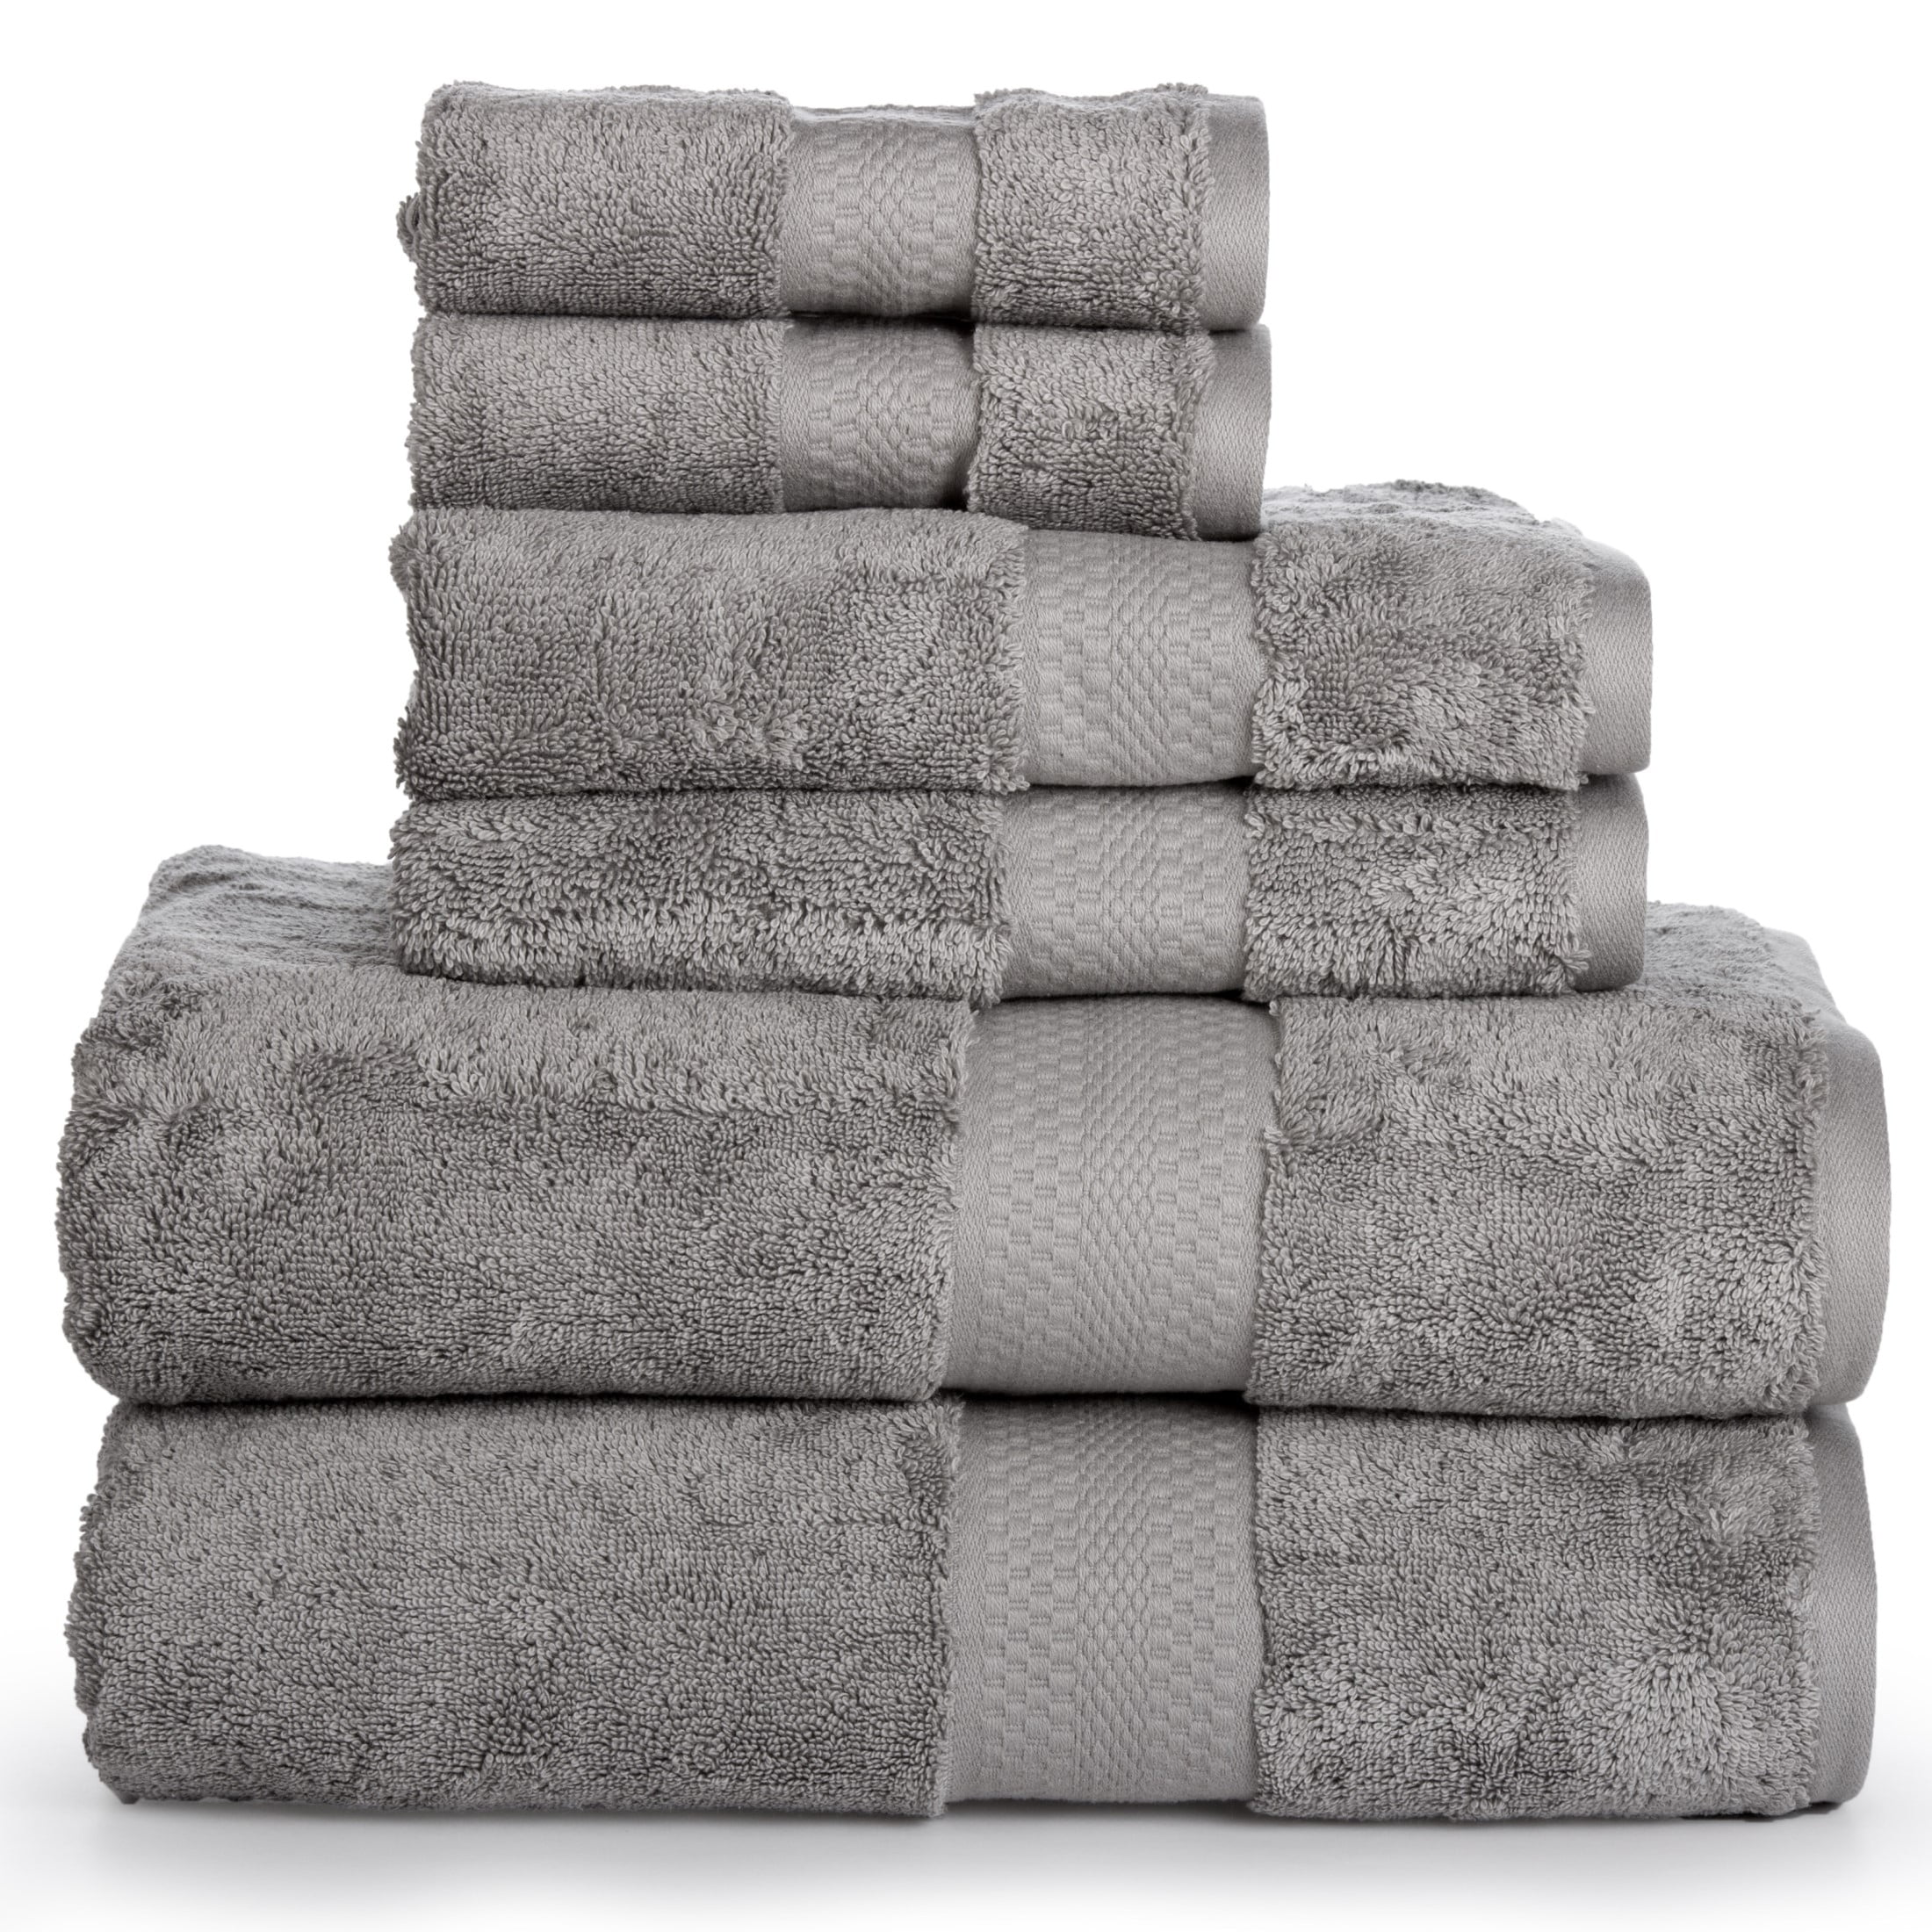 Luxury Cotton Bathroom Bath Towels-6 Piece Towel Set-Soft Plush and Absorbent 